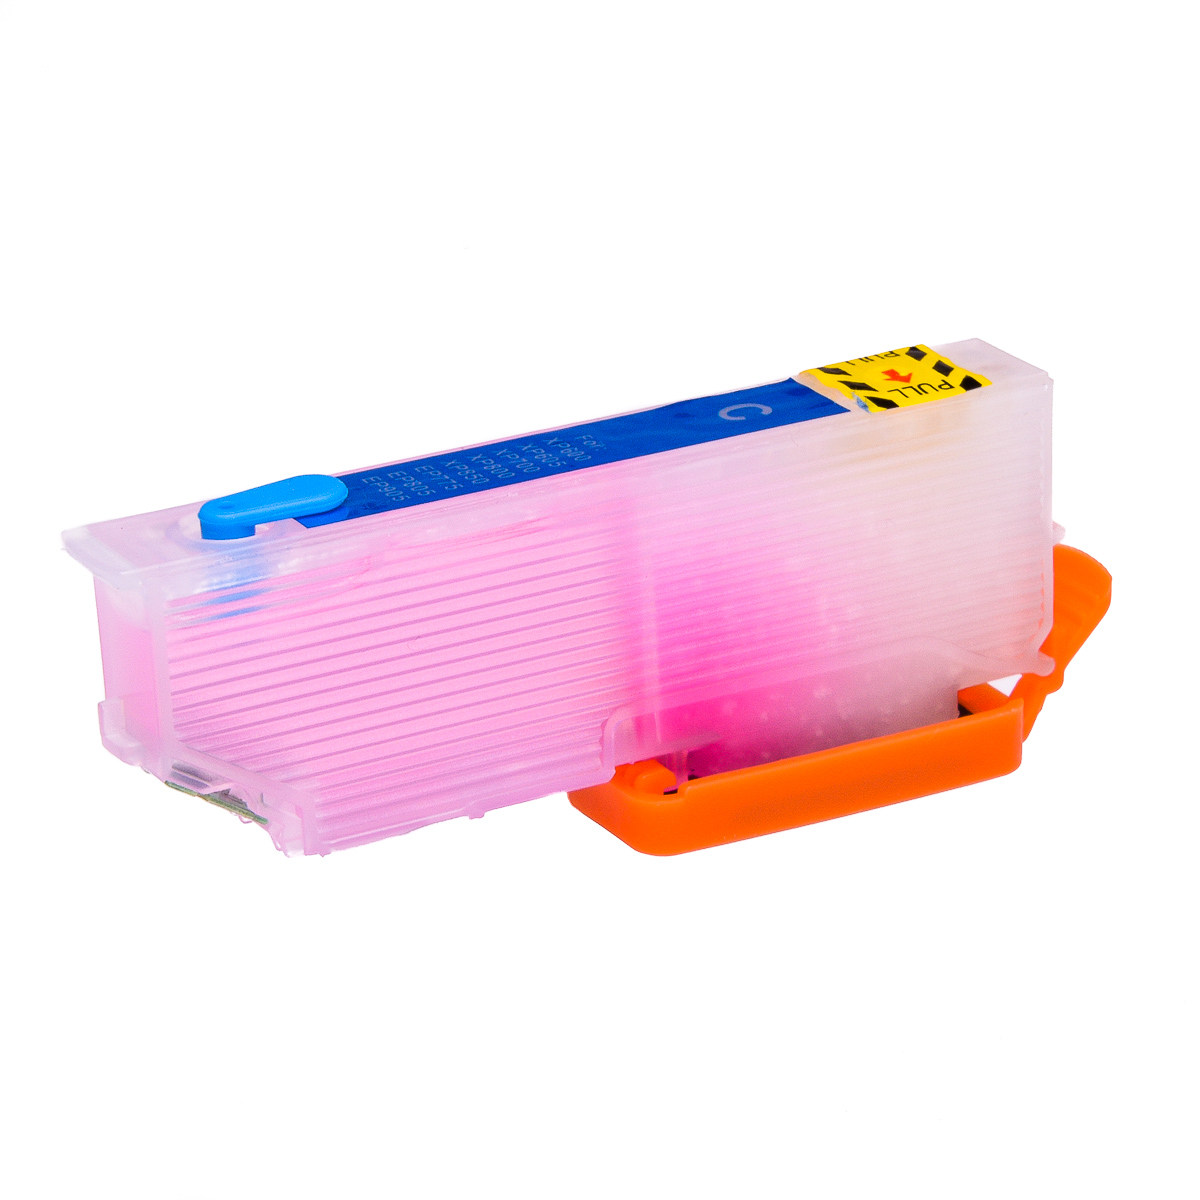 Cyan printhead cleaning cartridge for Epson XP-850 printer